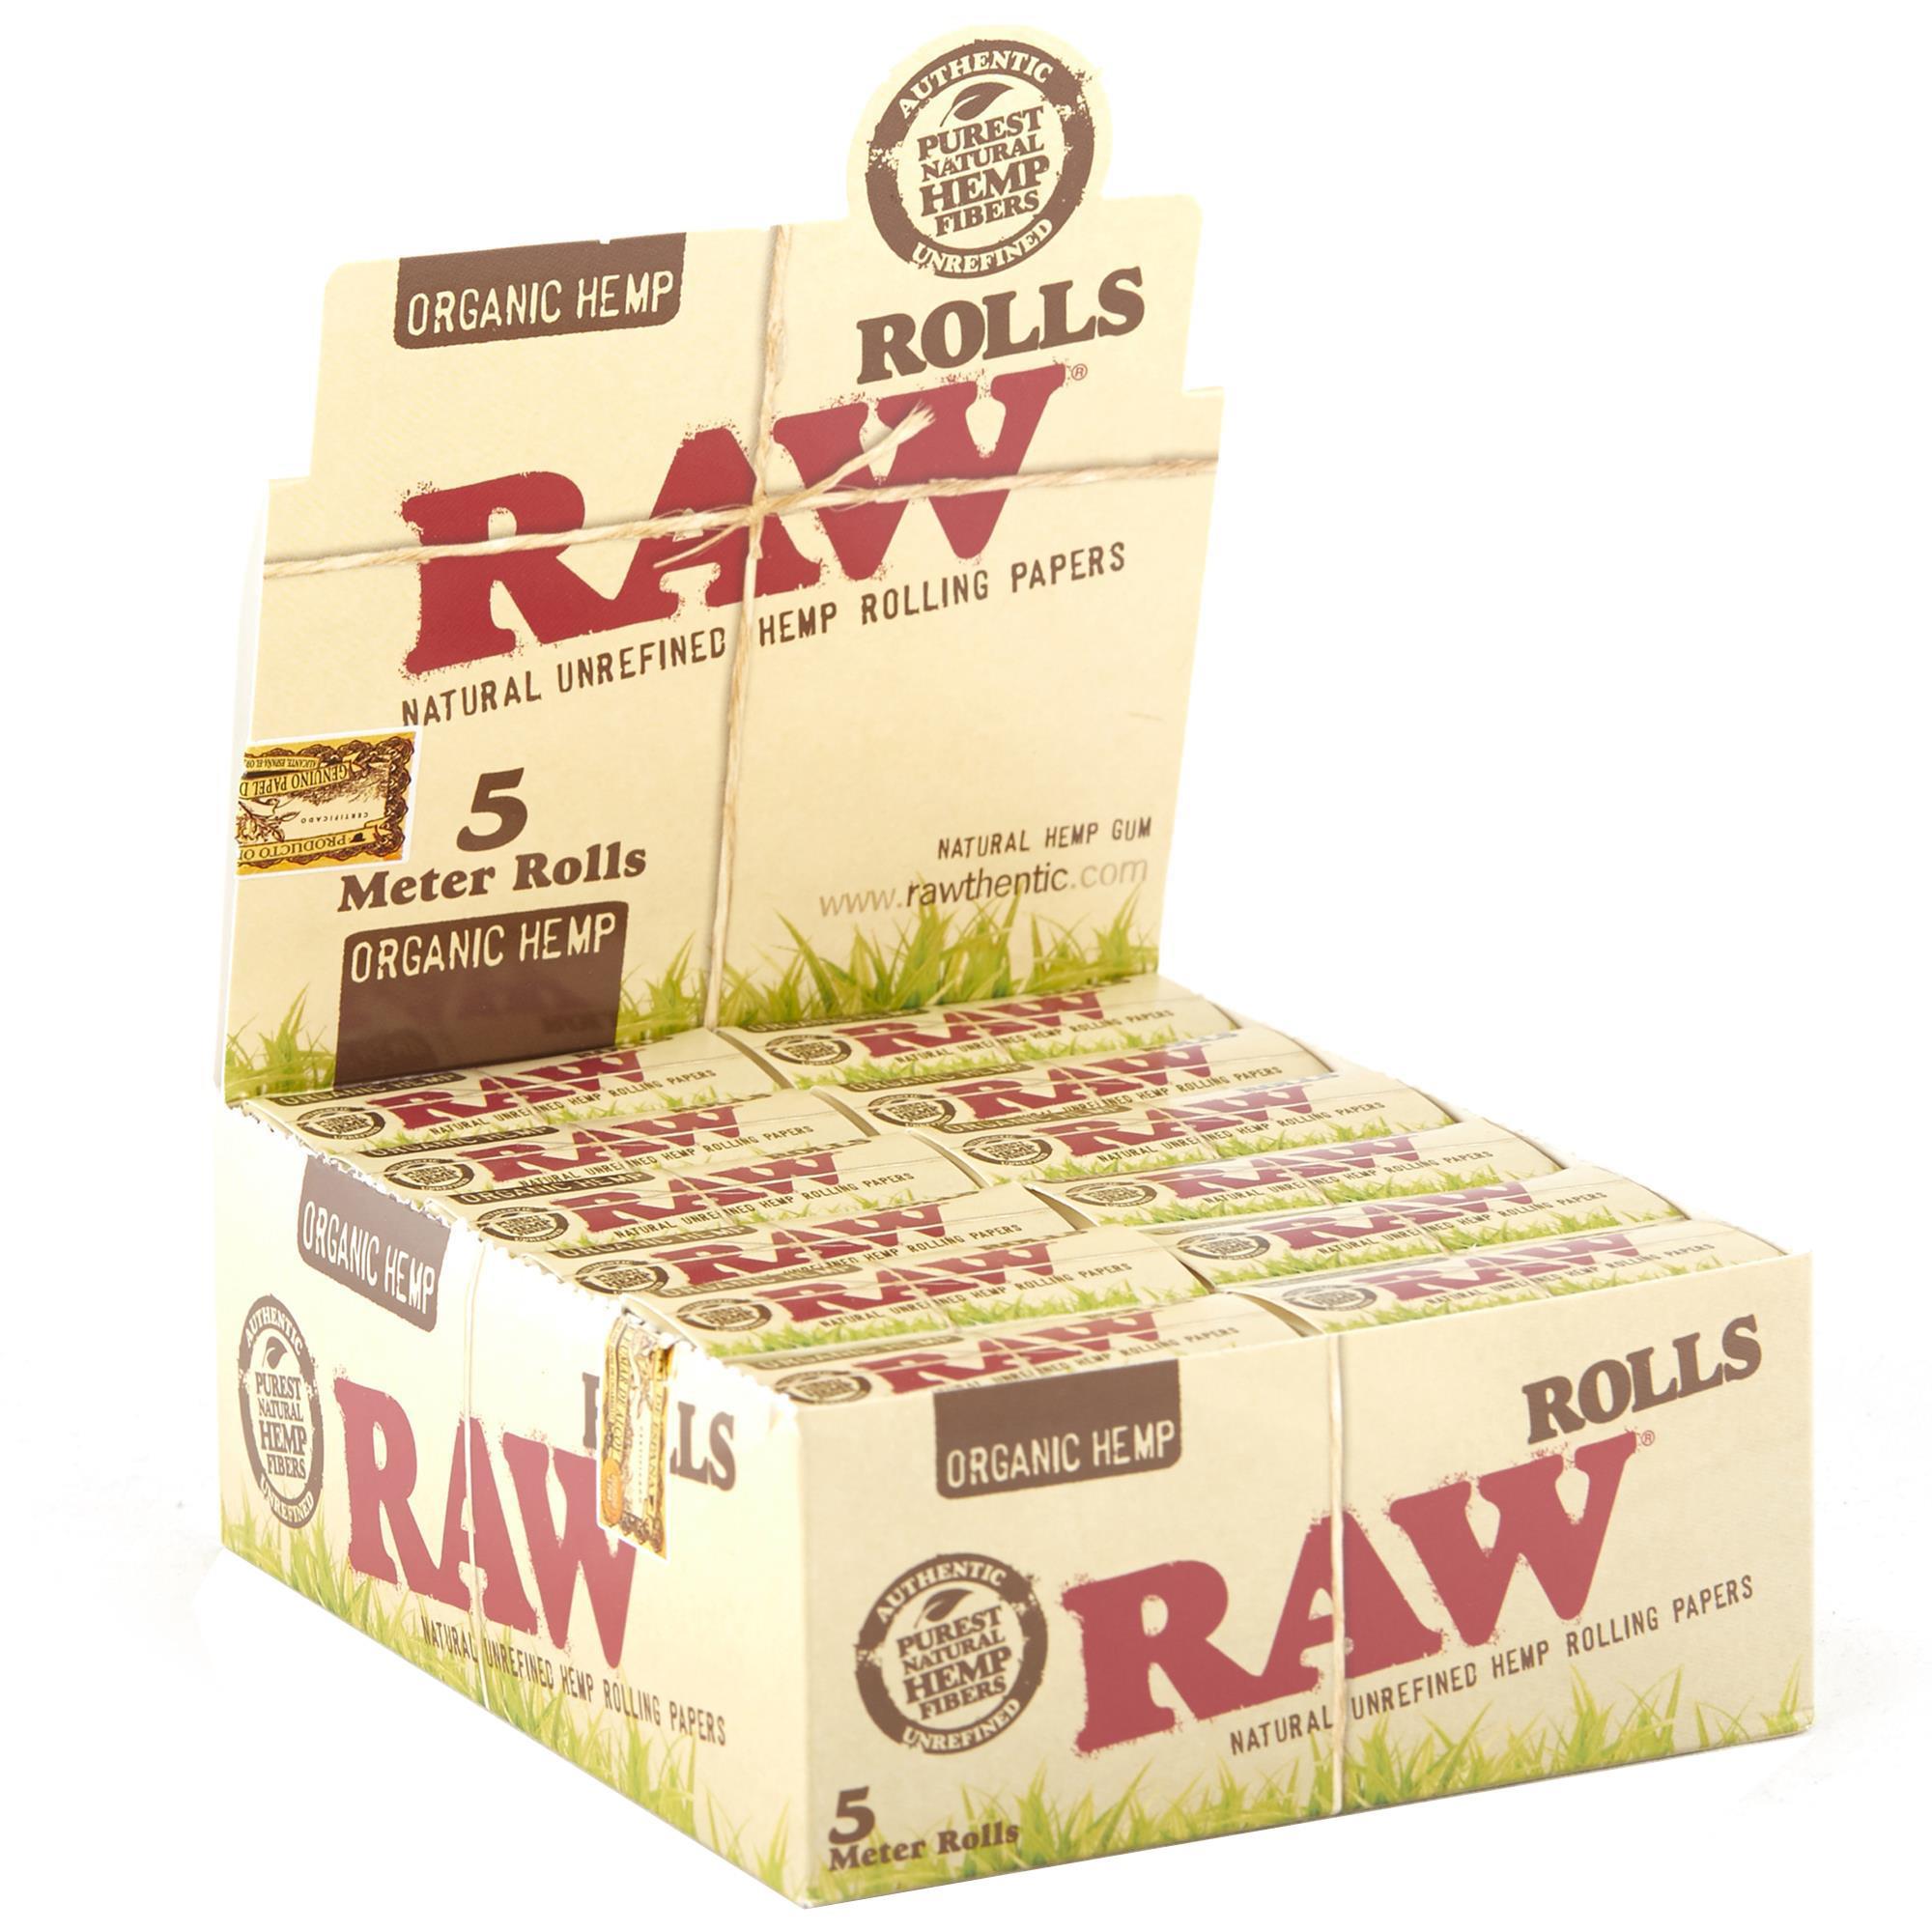 Raw Organic Hemp 5 Meter Rolls Natural Unrefined Hemp Rolling Papers 